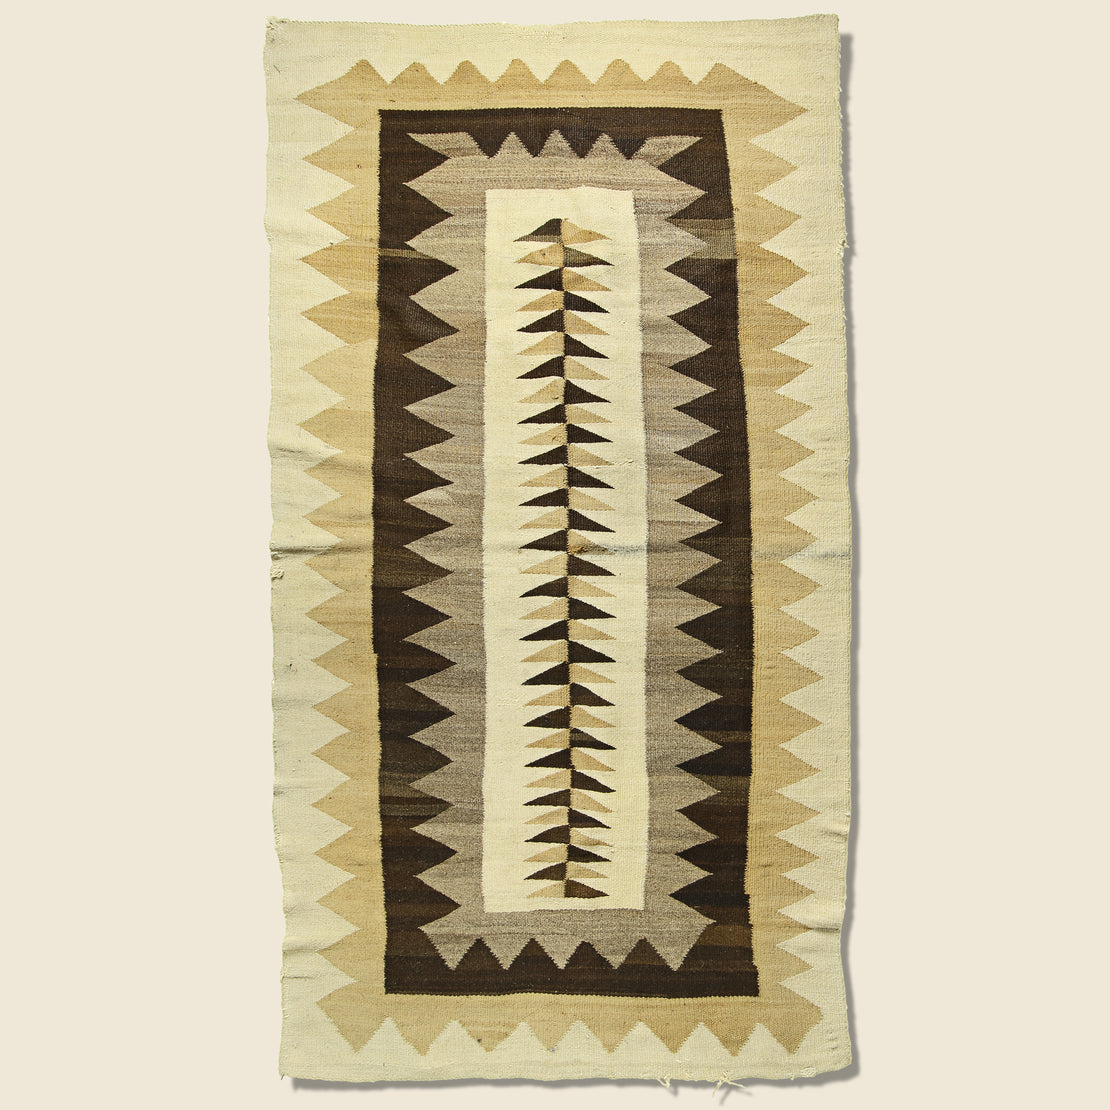 Vintage Zig-Zag Hand-Woven Navajo Wool Rug - Natural Brown